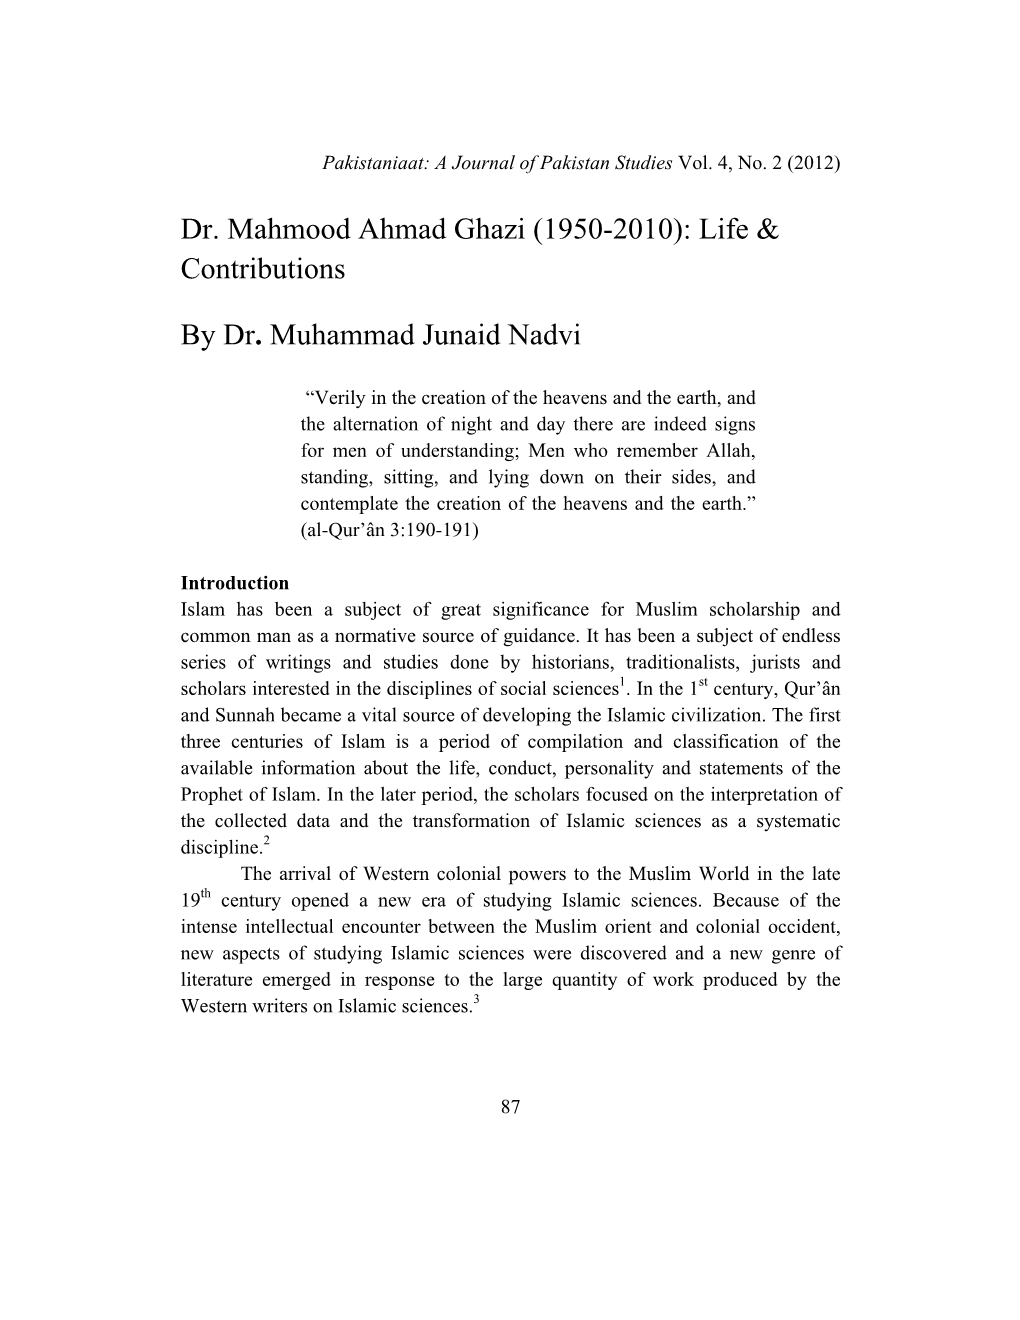 Dr. Mahmood Ahmad Ghazi (1950-2010): Life & Contributions by Dr. Muhammad Junaid Nadvi